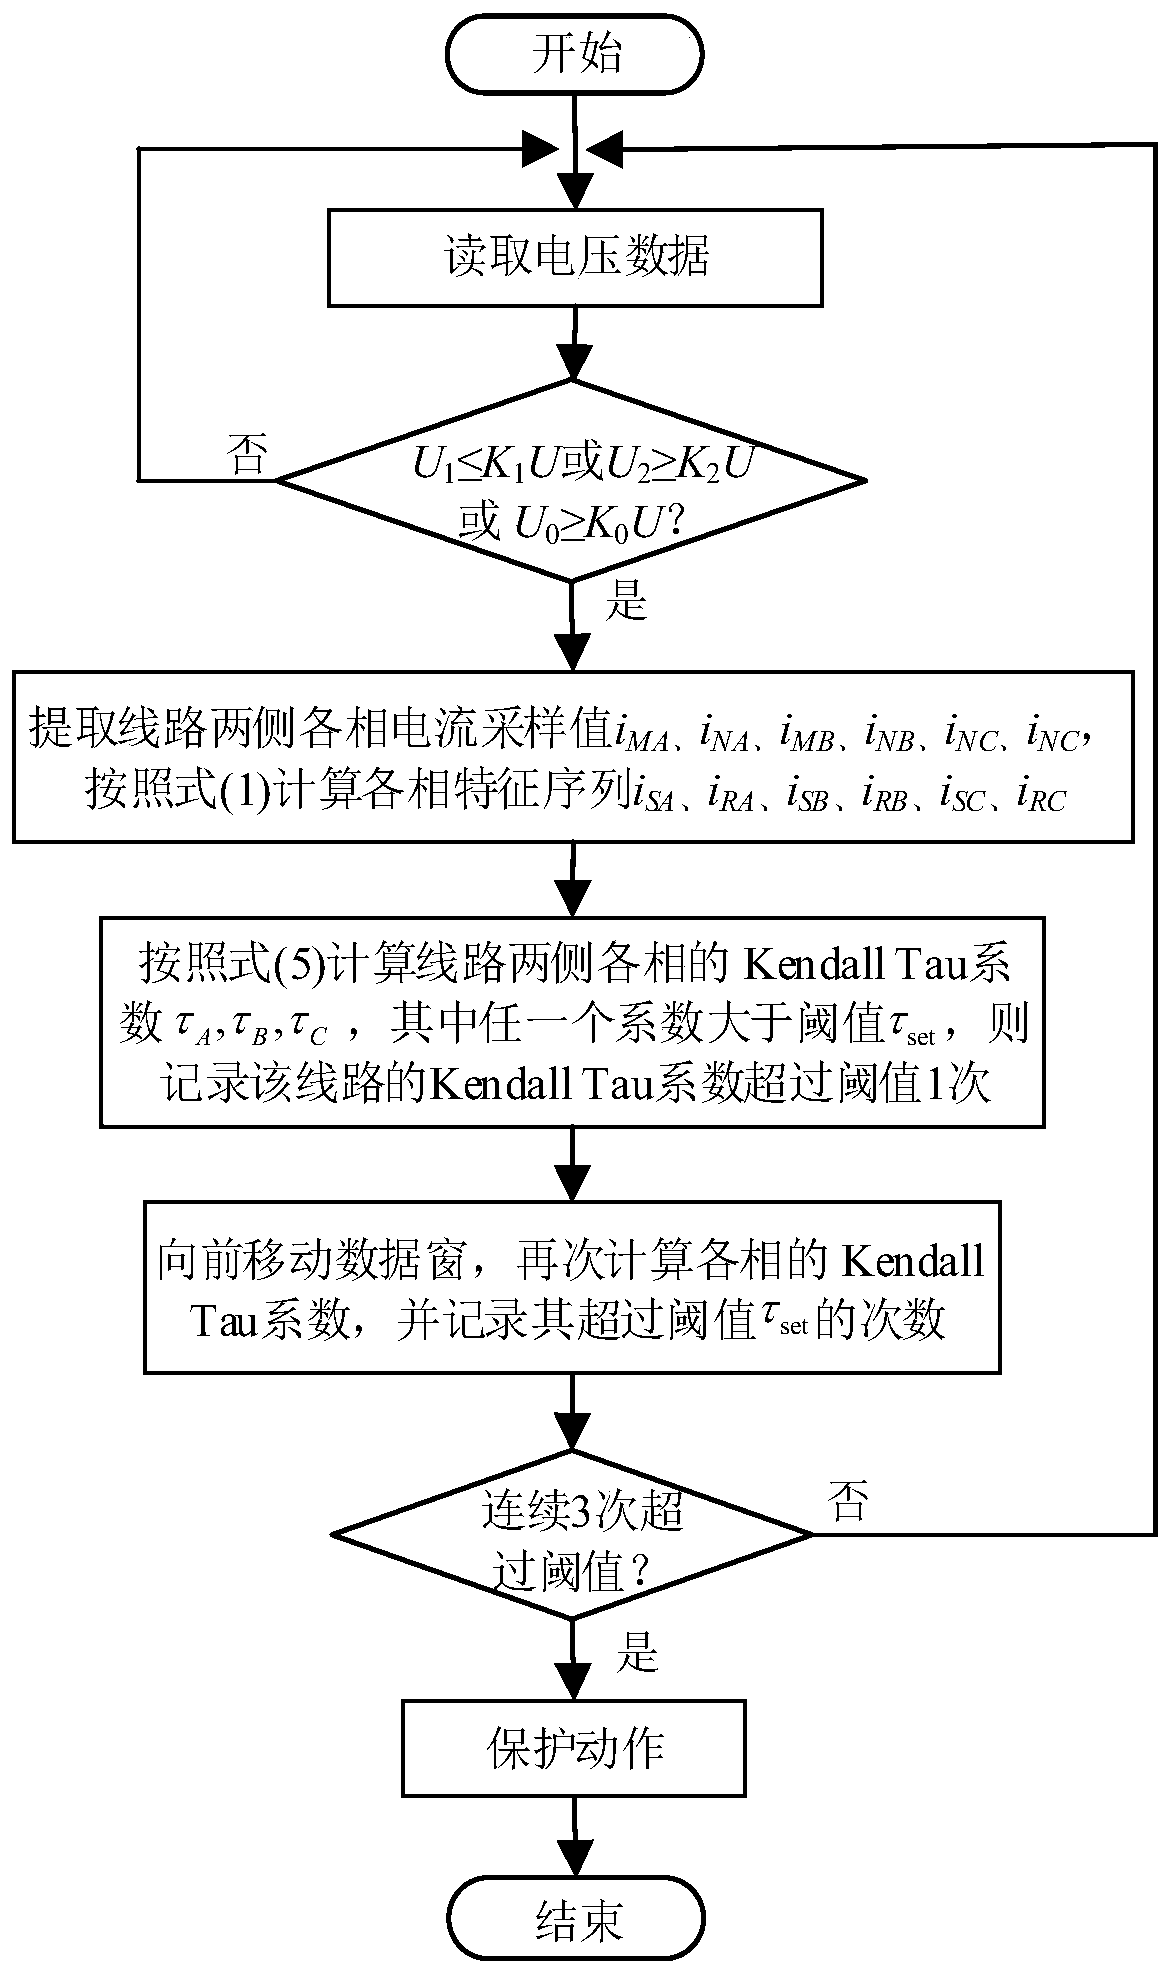 Power transmission line pilot protection method based on Kendall Tau coefficient